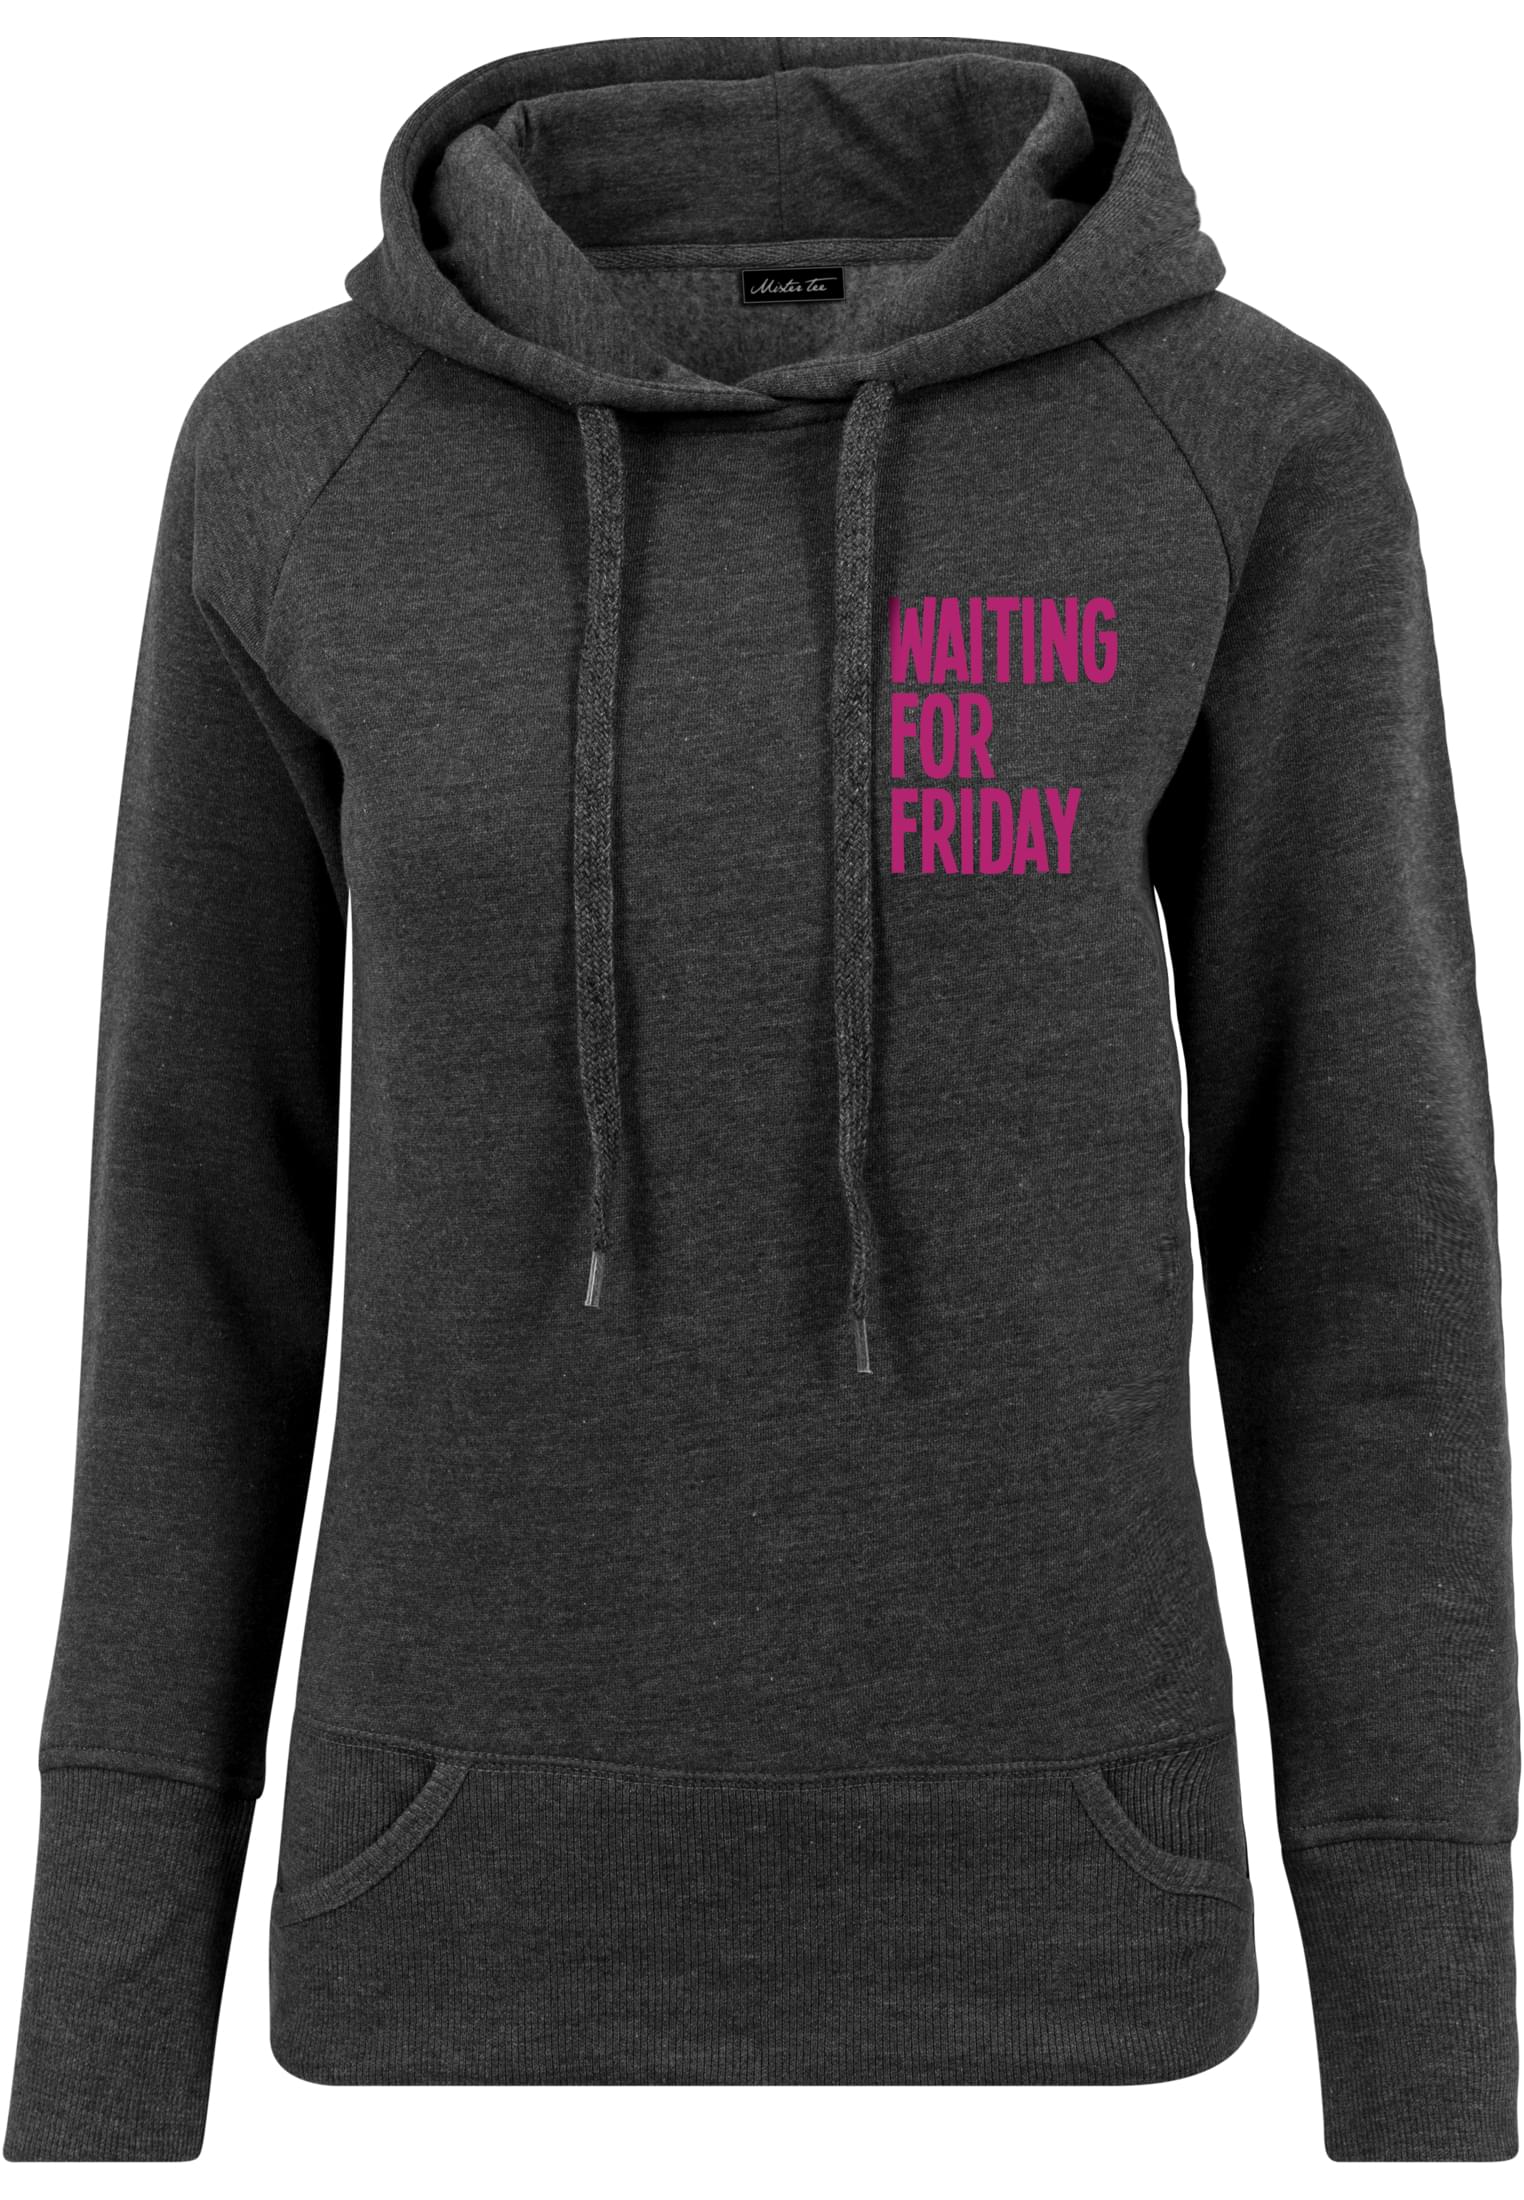 Women's Waiting For Friday Sweatshirt - Grey